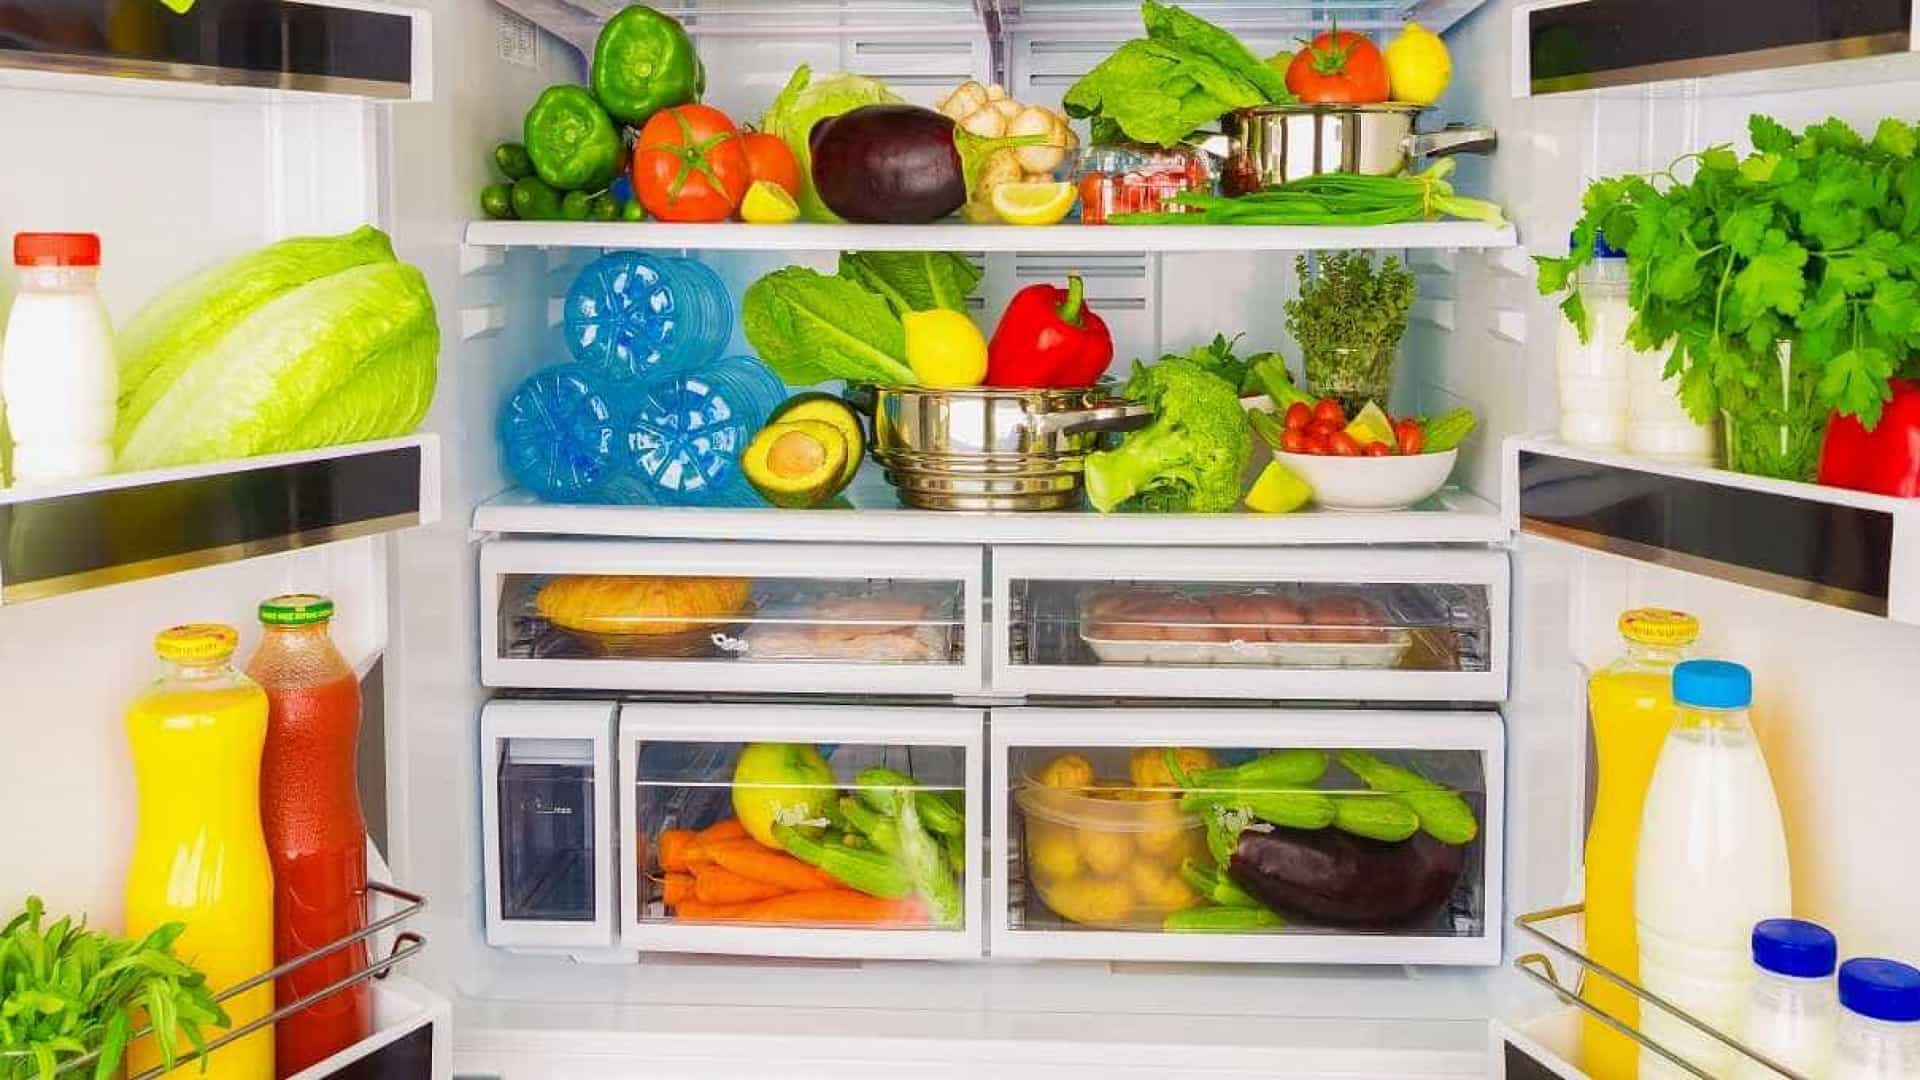 Alimentos na geladeira.jpg